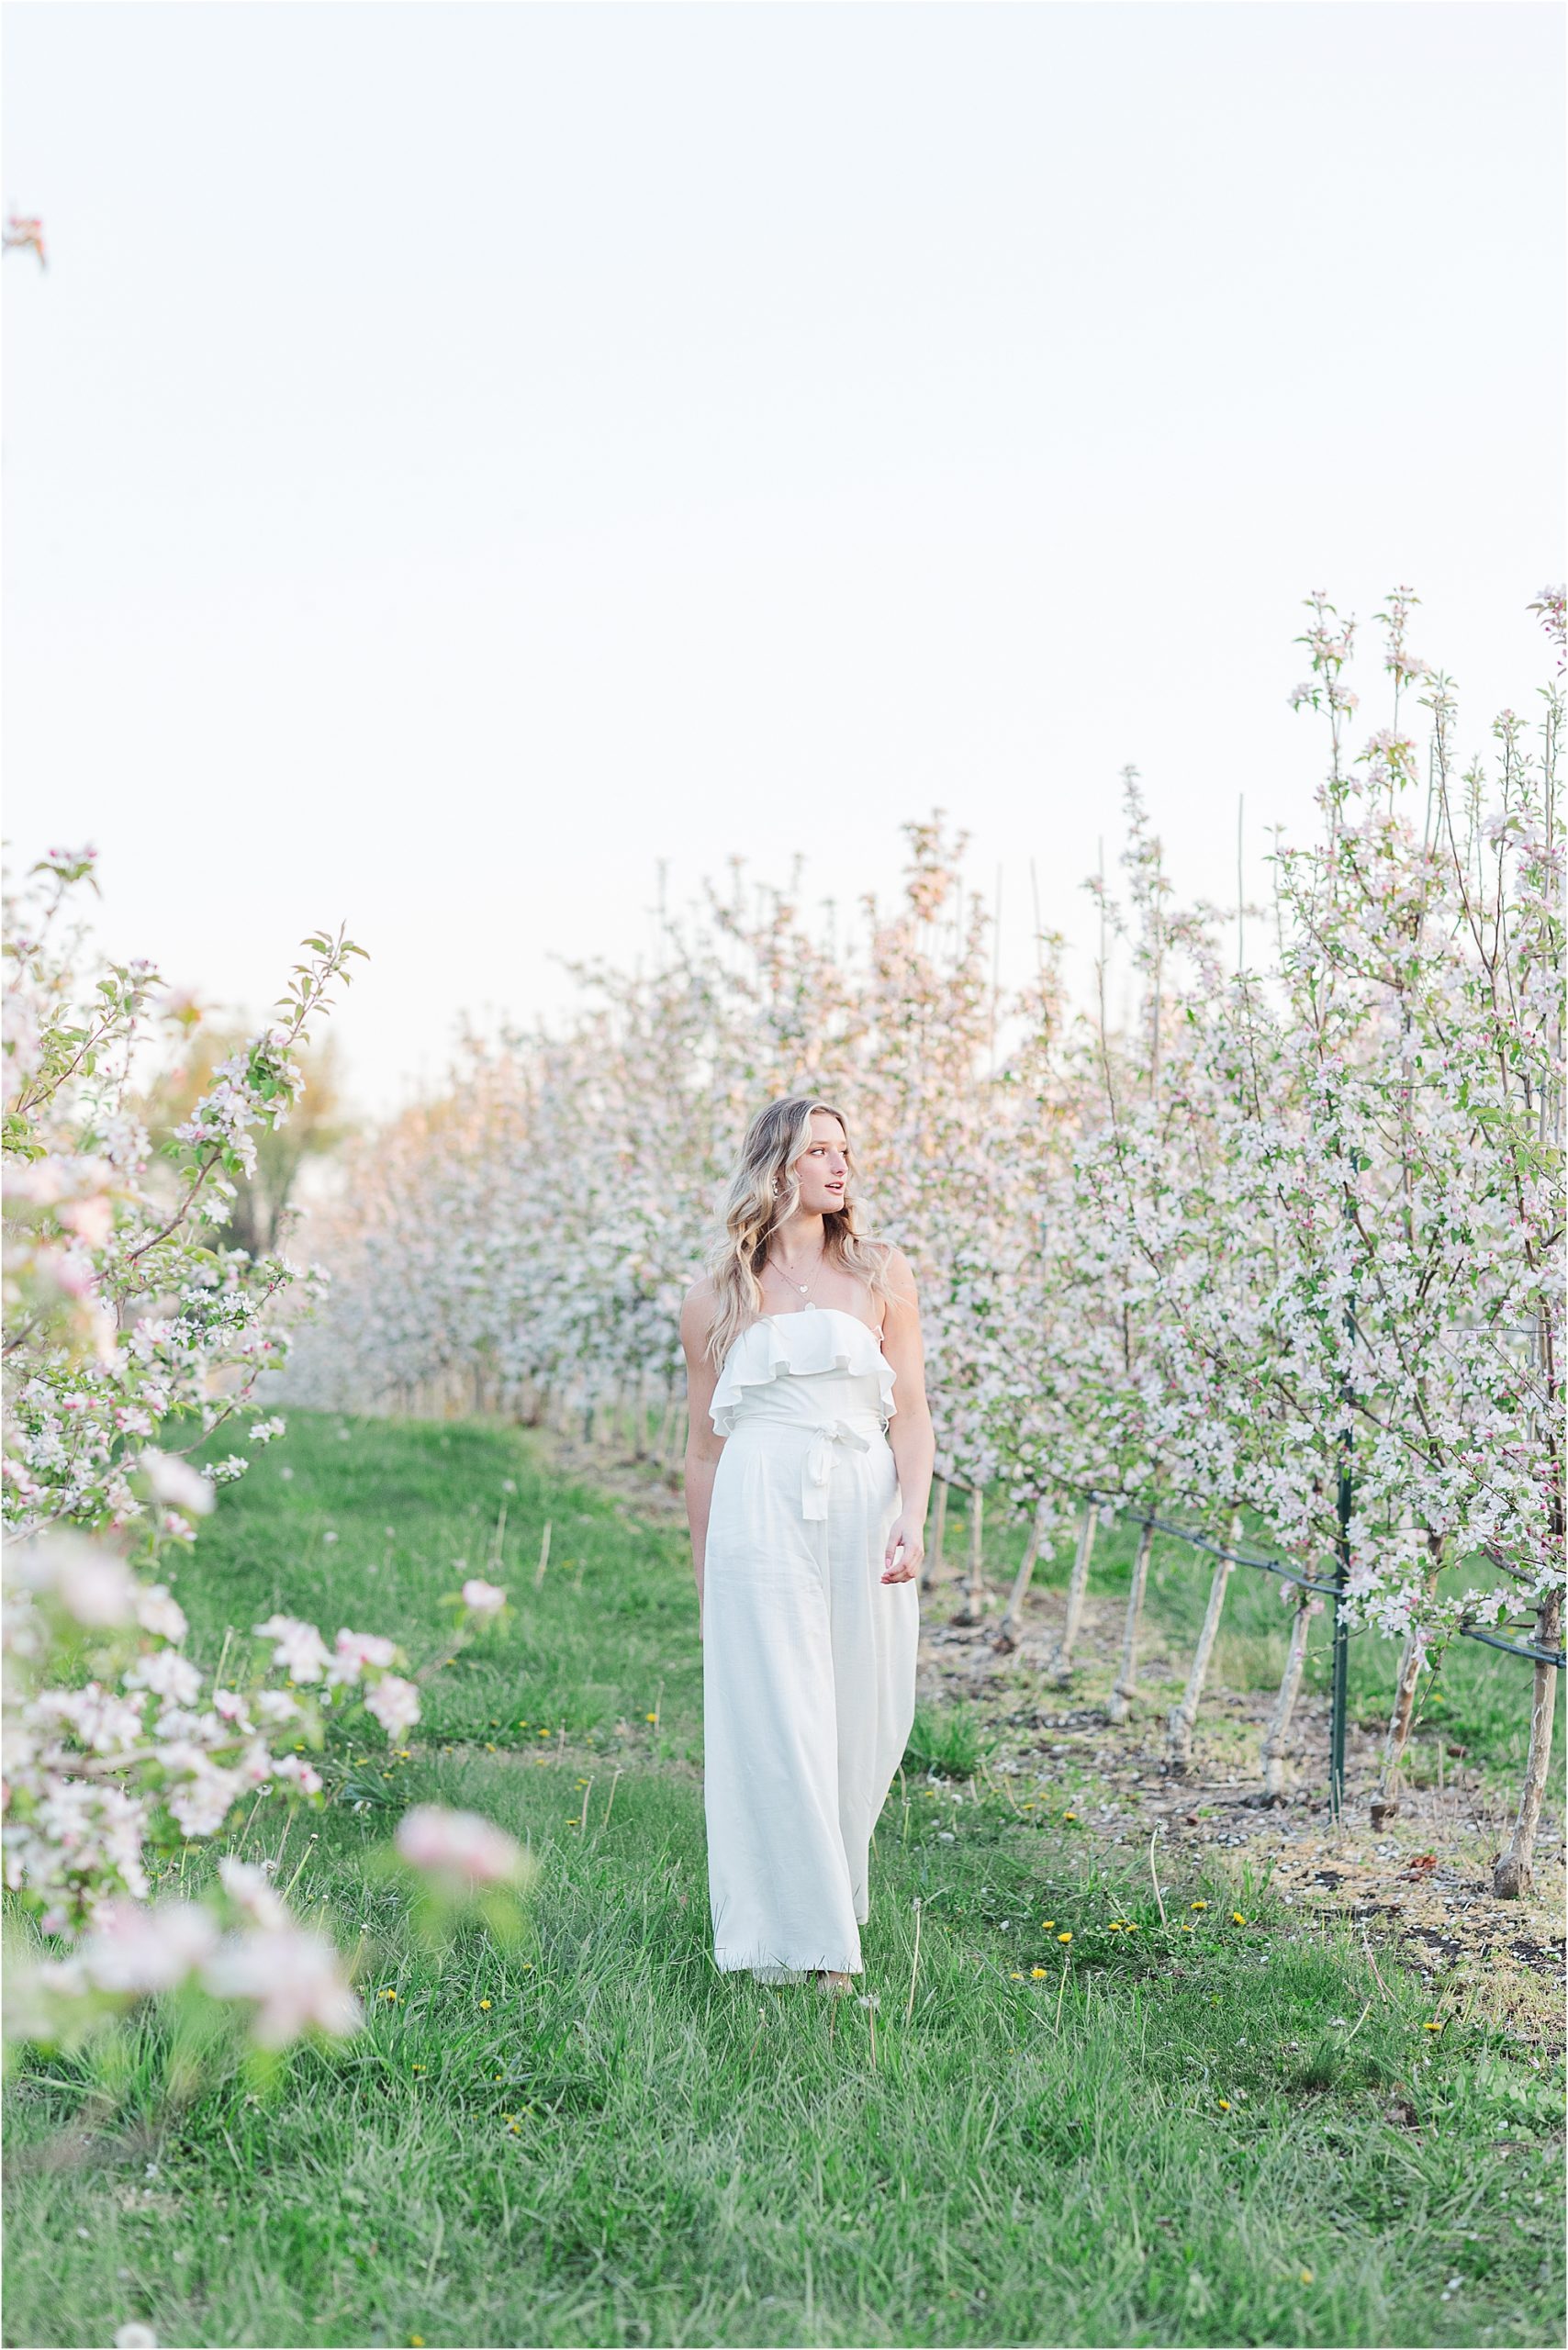 Emma | Cider Hill Family Orchard apple blossom senior photos | | Kelsey Alumbaugh Photography | #appleblossomsession #springseniorphotos #seniorphotos #appleblossoms #kcappleblossom